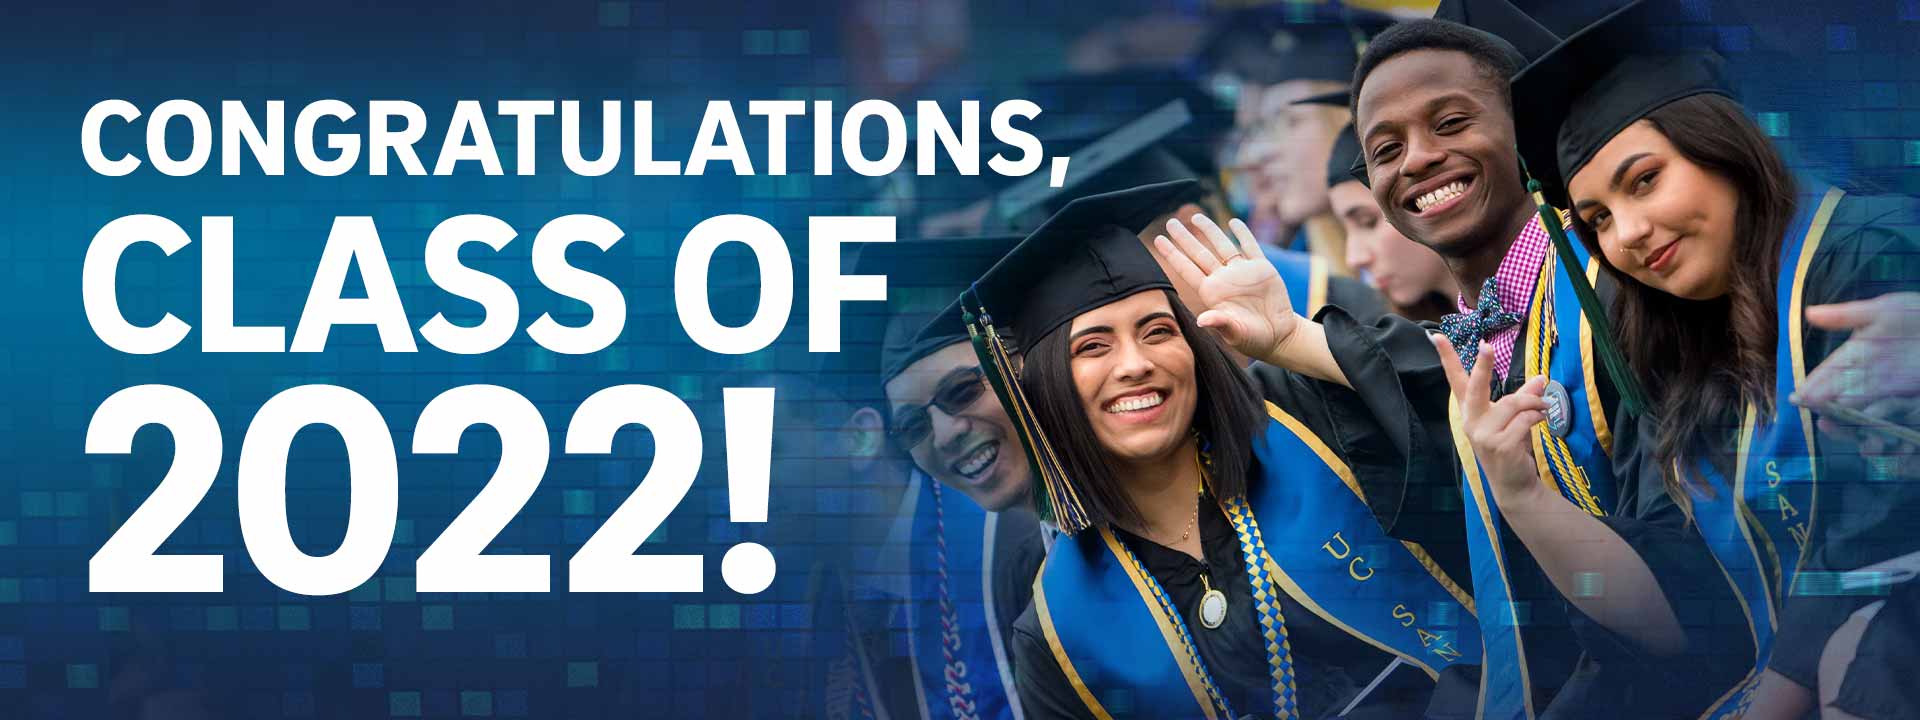 Congratulations, Class of 2022!